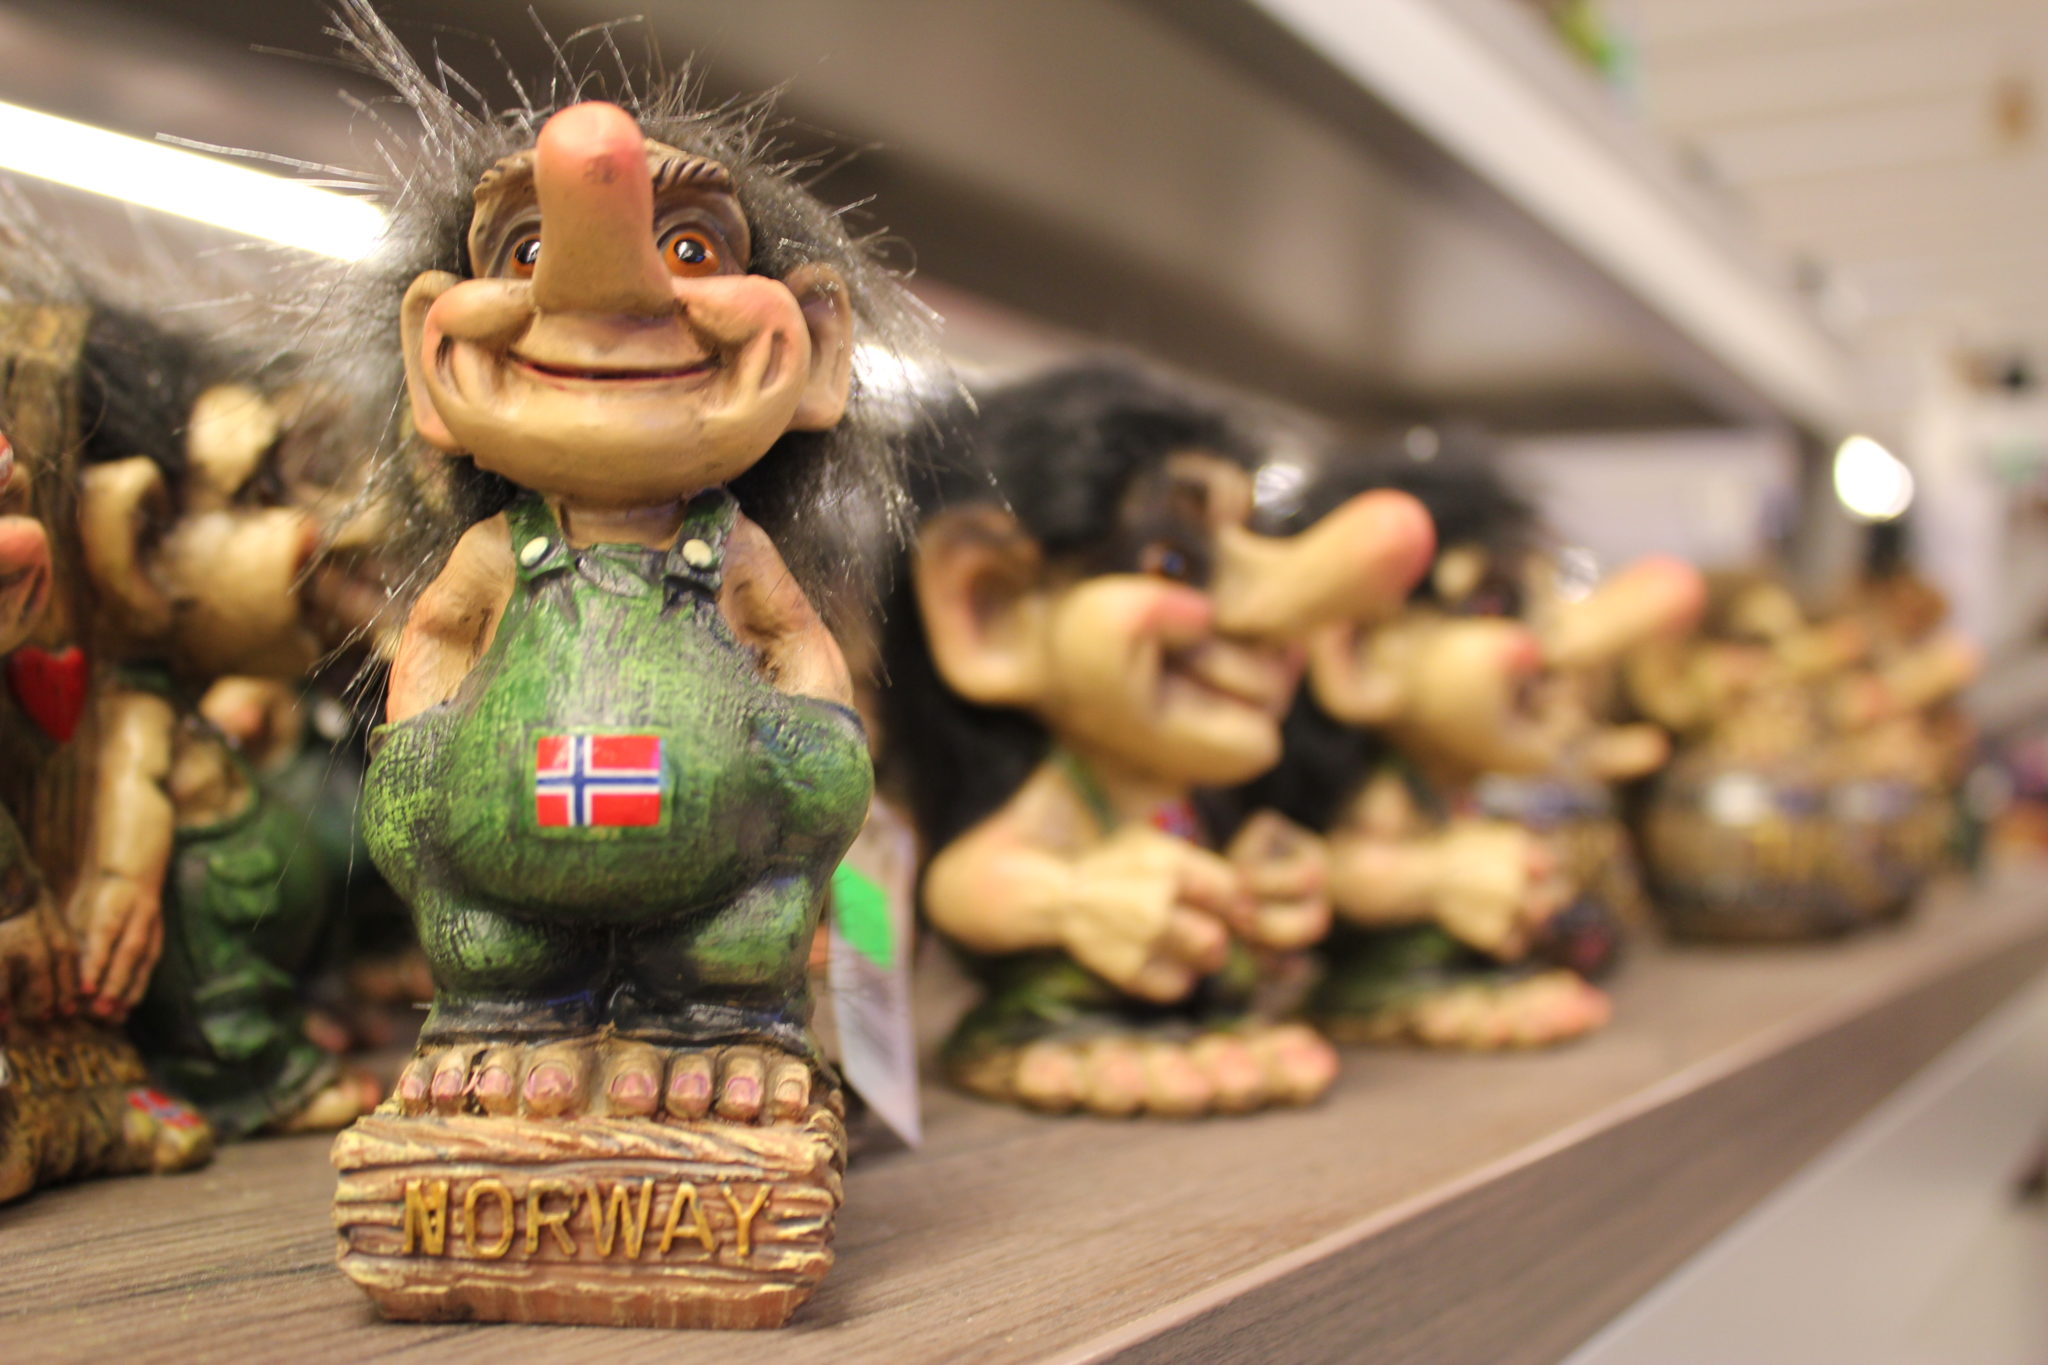 Masse souvenirer finnes i Lundebutikken.